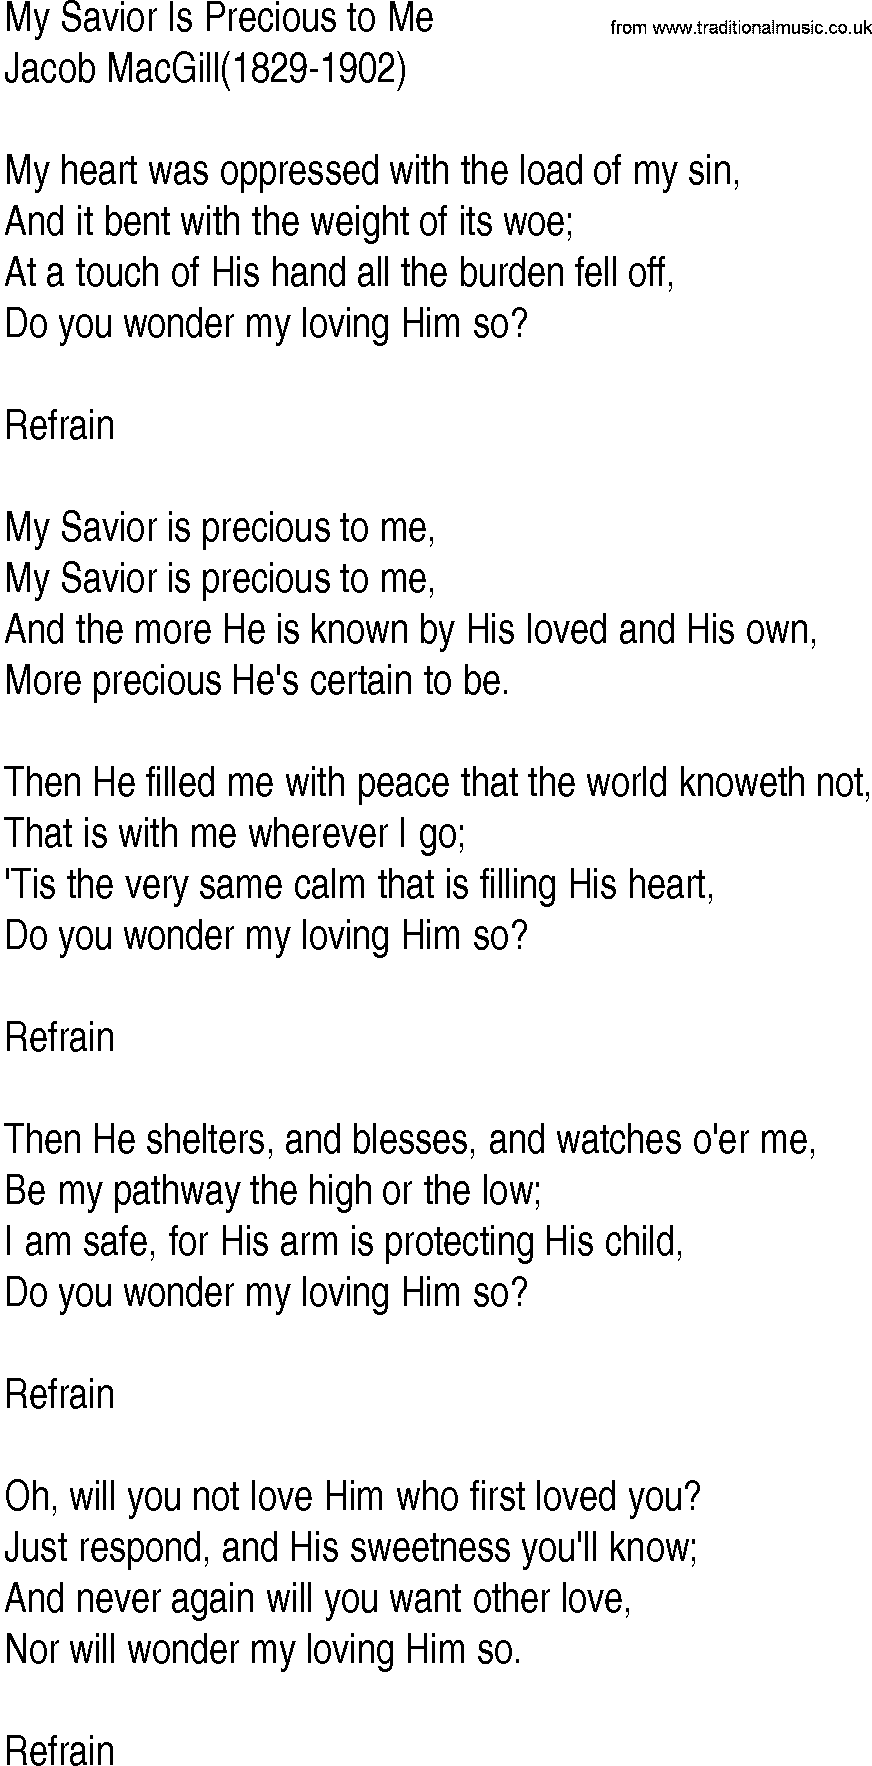 Hymn and Gospel Song: My Savior Is Precious to Me by Jacob MacGill lyrics